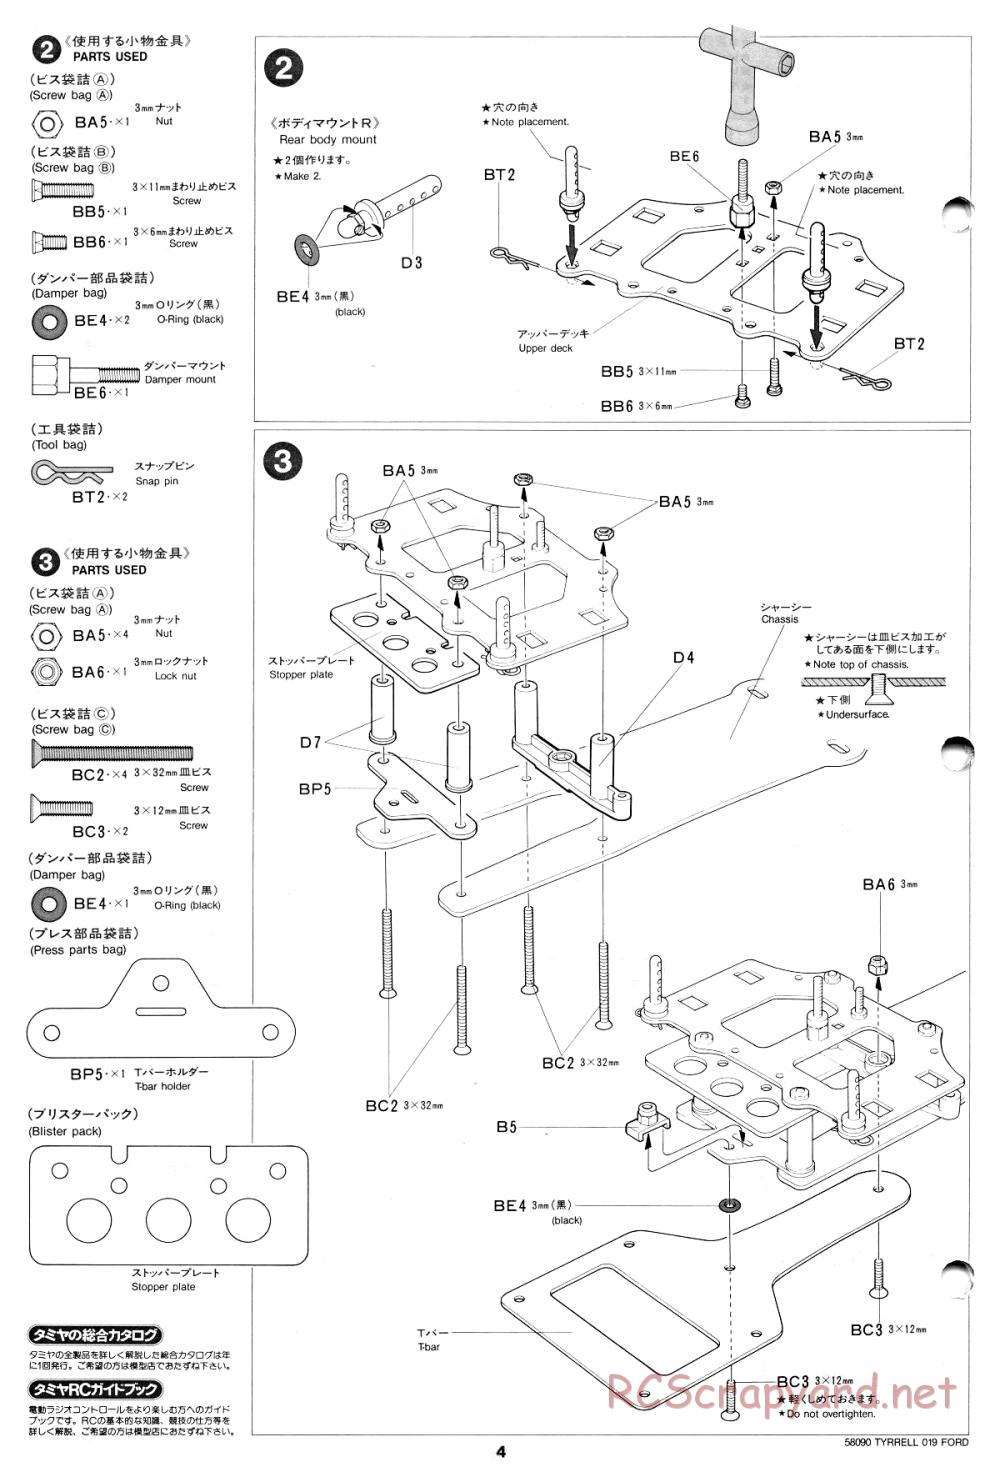 Tamiya - Tyrrell 019 Ford - 58090 - Manual - Page 4